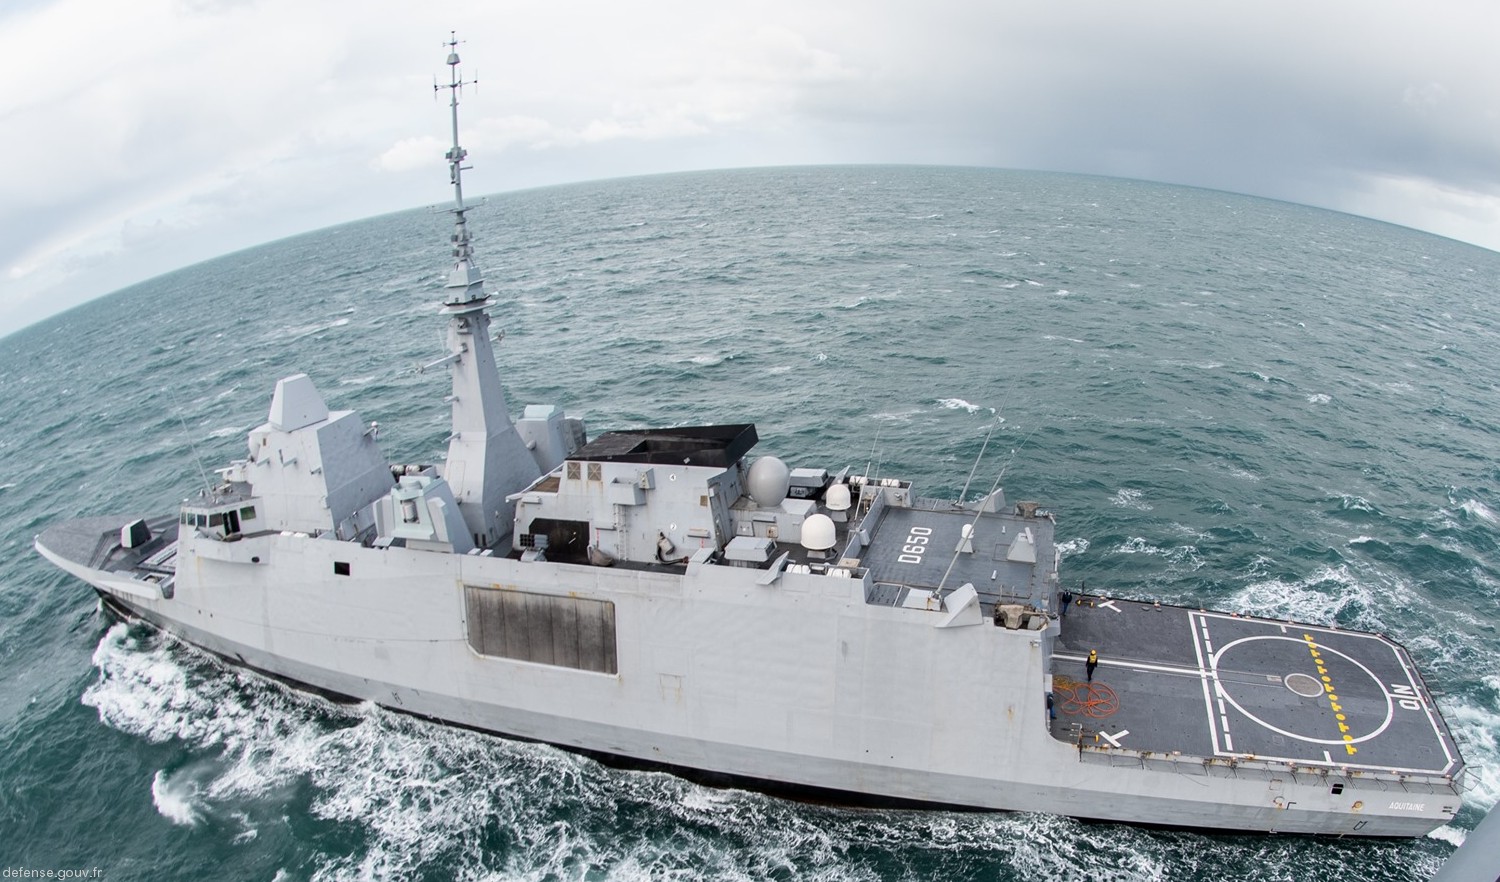 d-650 fs aquitaine fremm class frigate fregate multi purpose french navy marine nationale 36